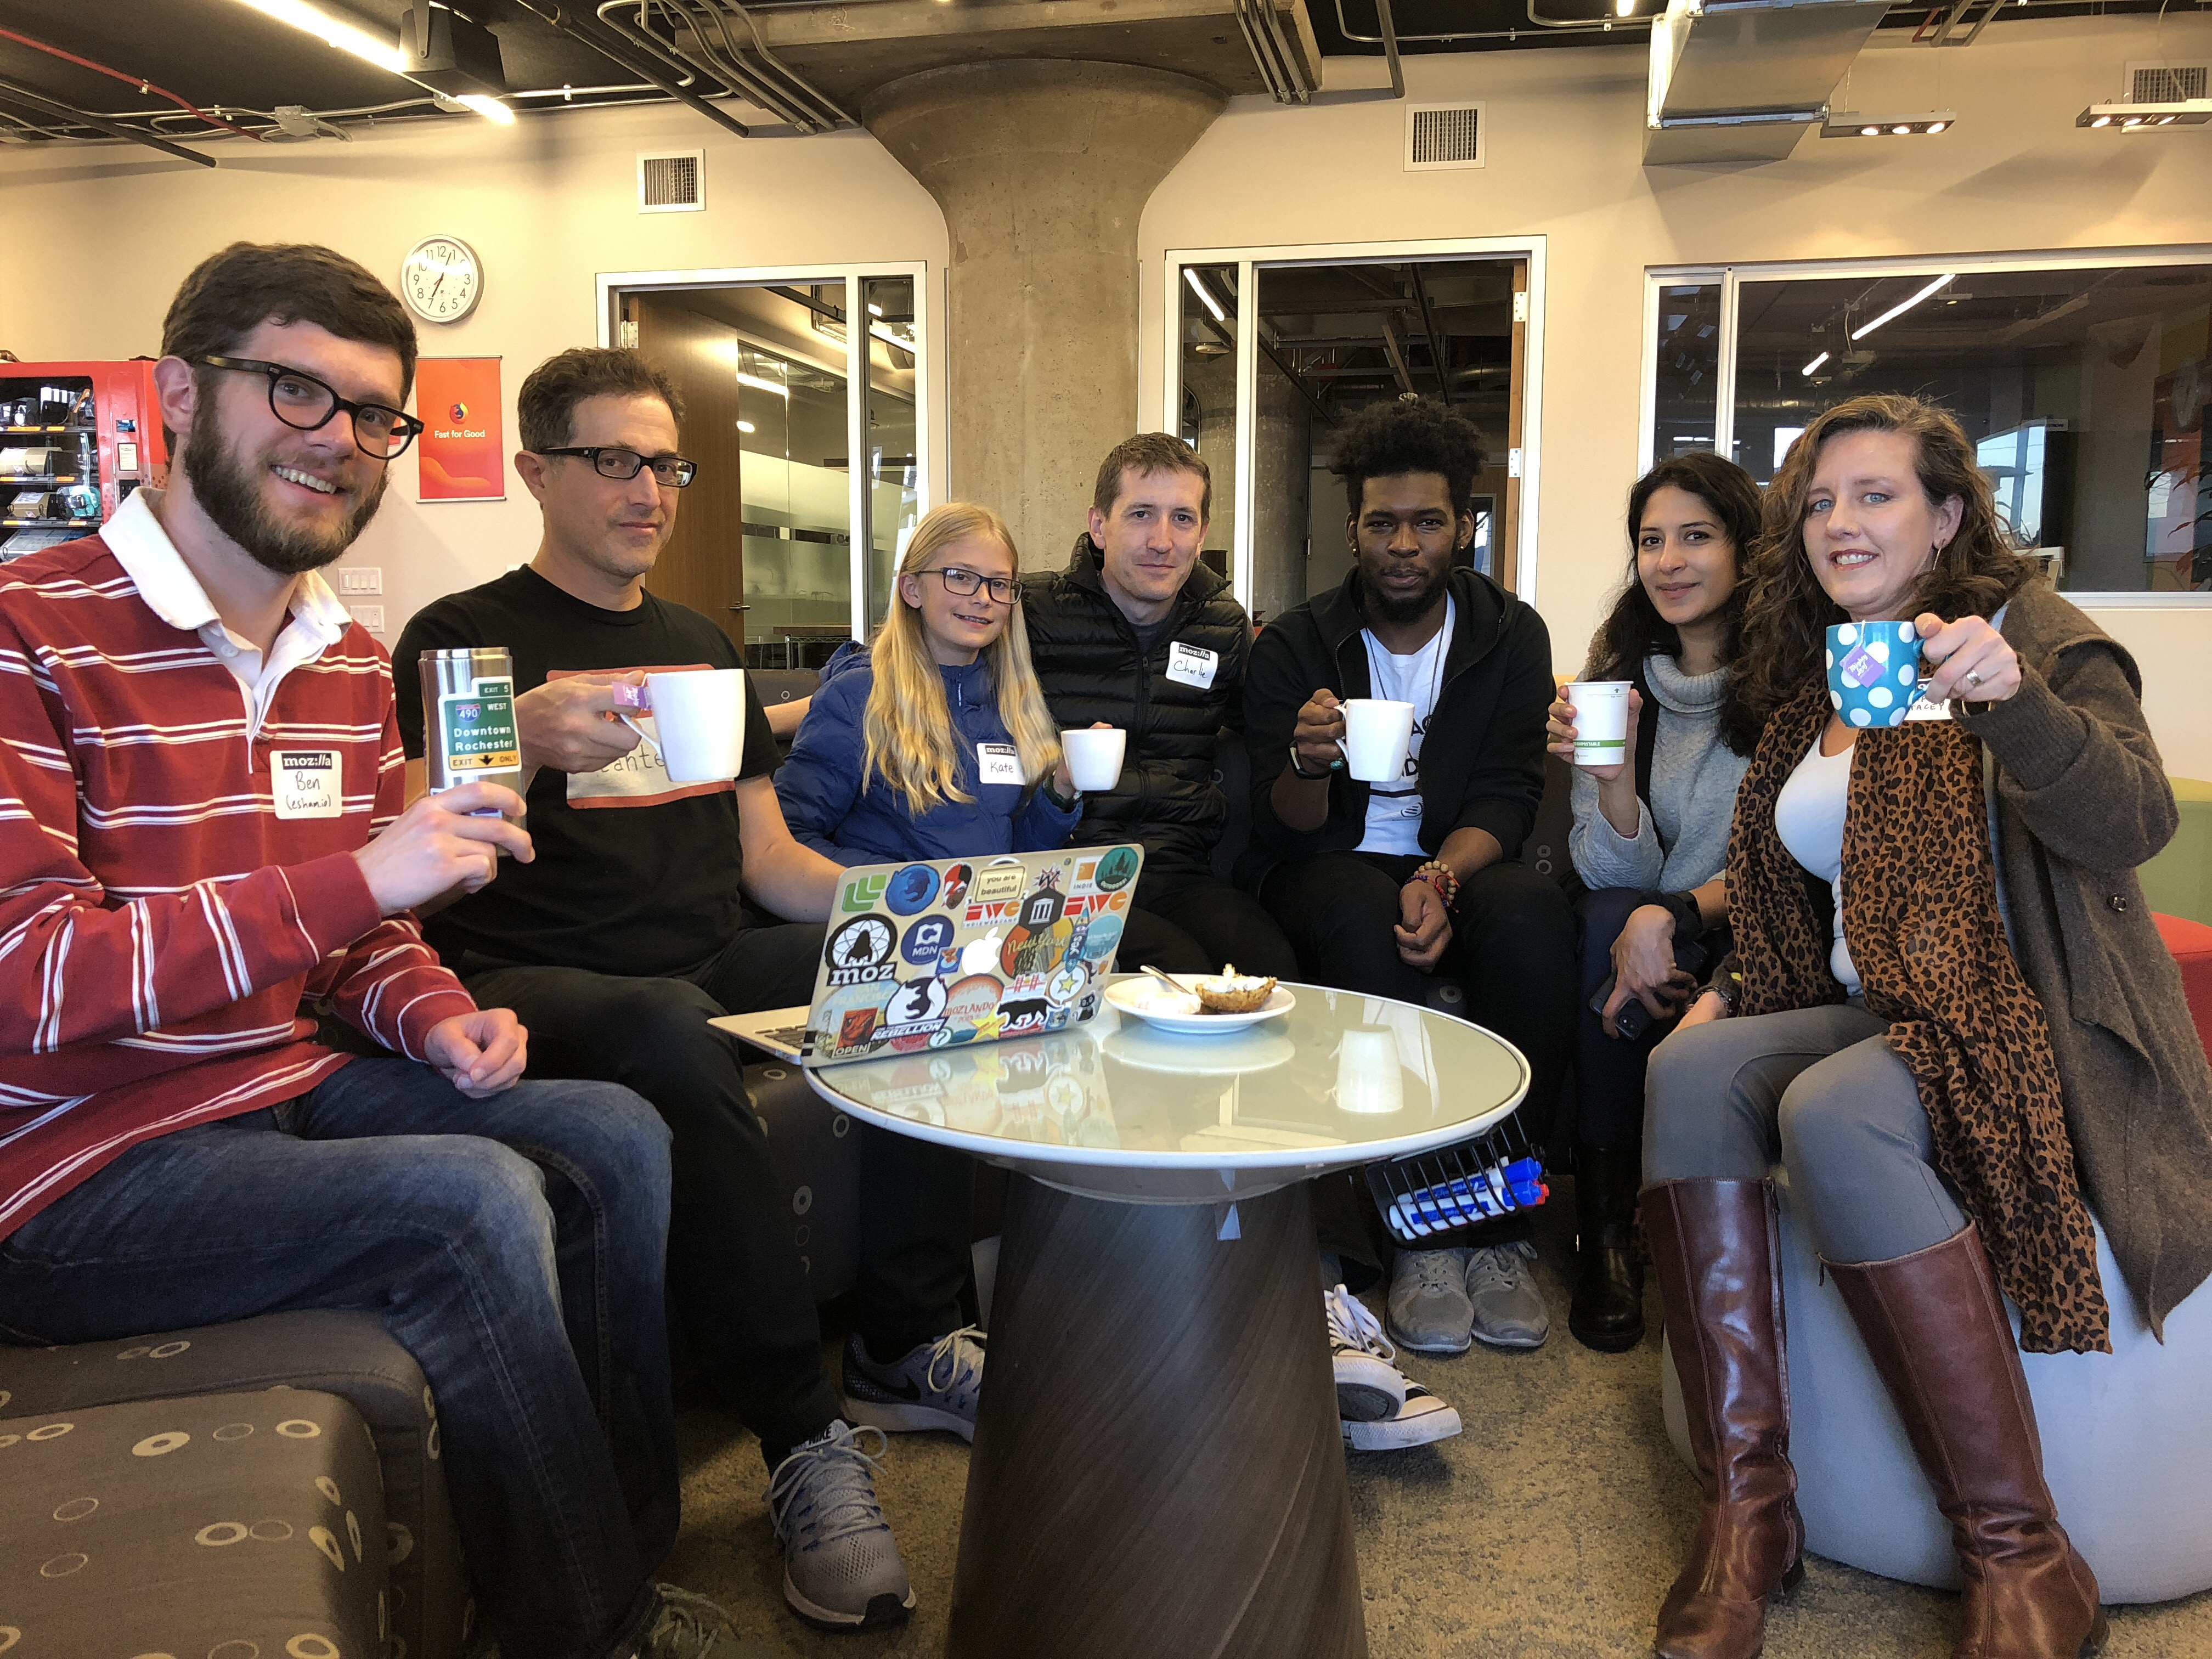 Homebrew Website Club San Francisco participants raising their tea mugs in honor of HTTP 418